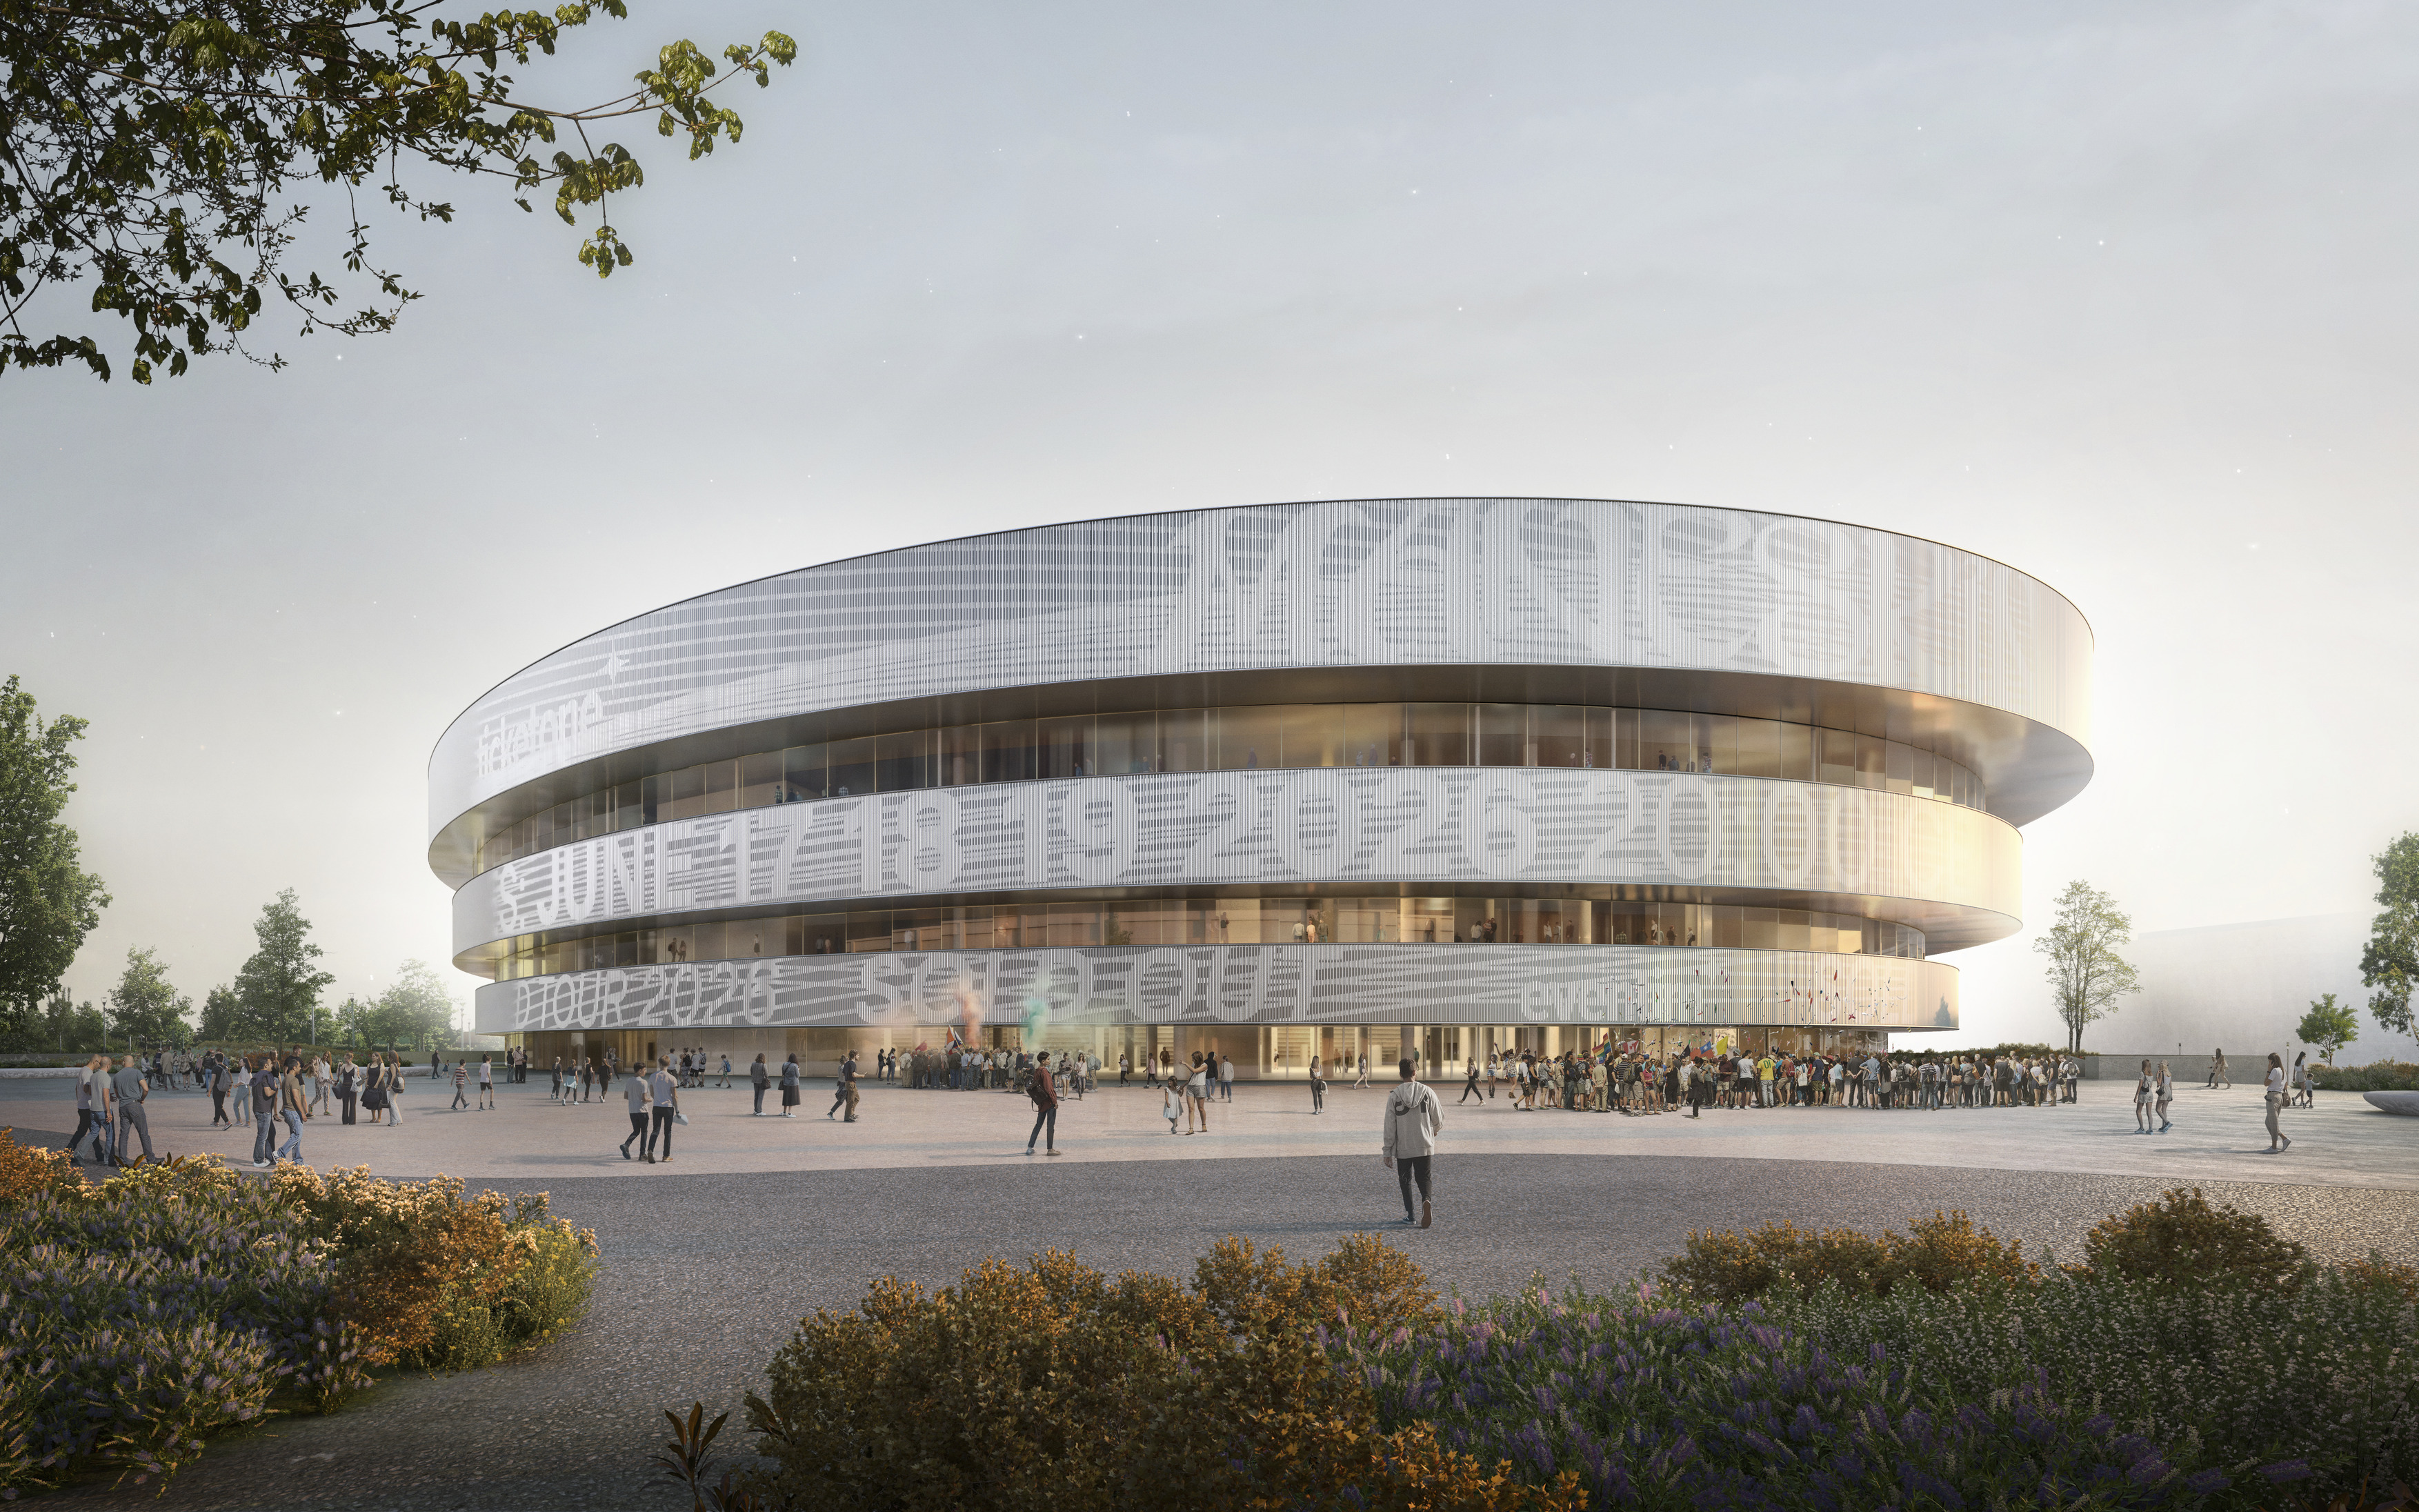 Santa Giulia Arena 的环形场馆设计是以米兰古圆形剧场为灵感。